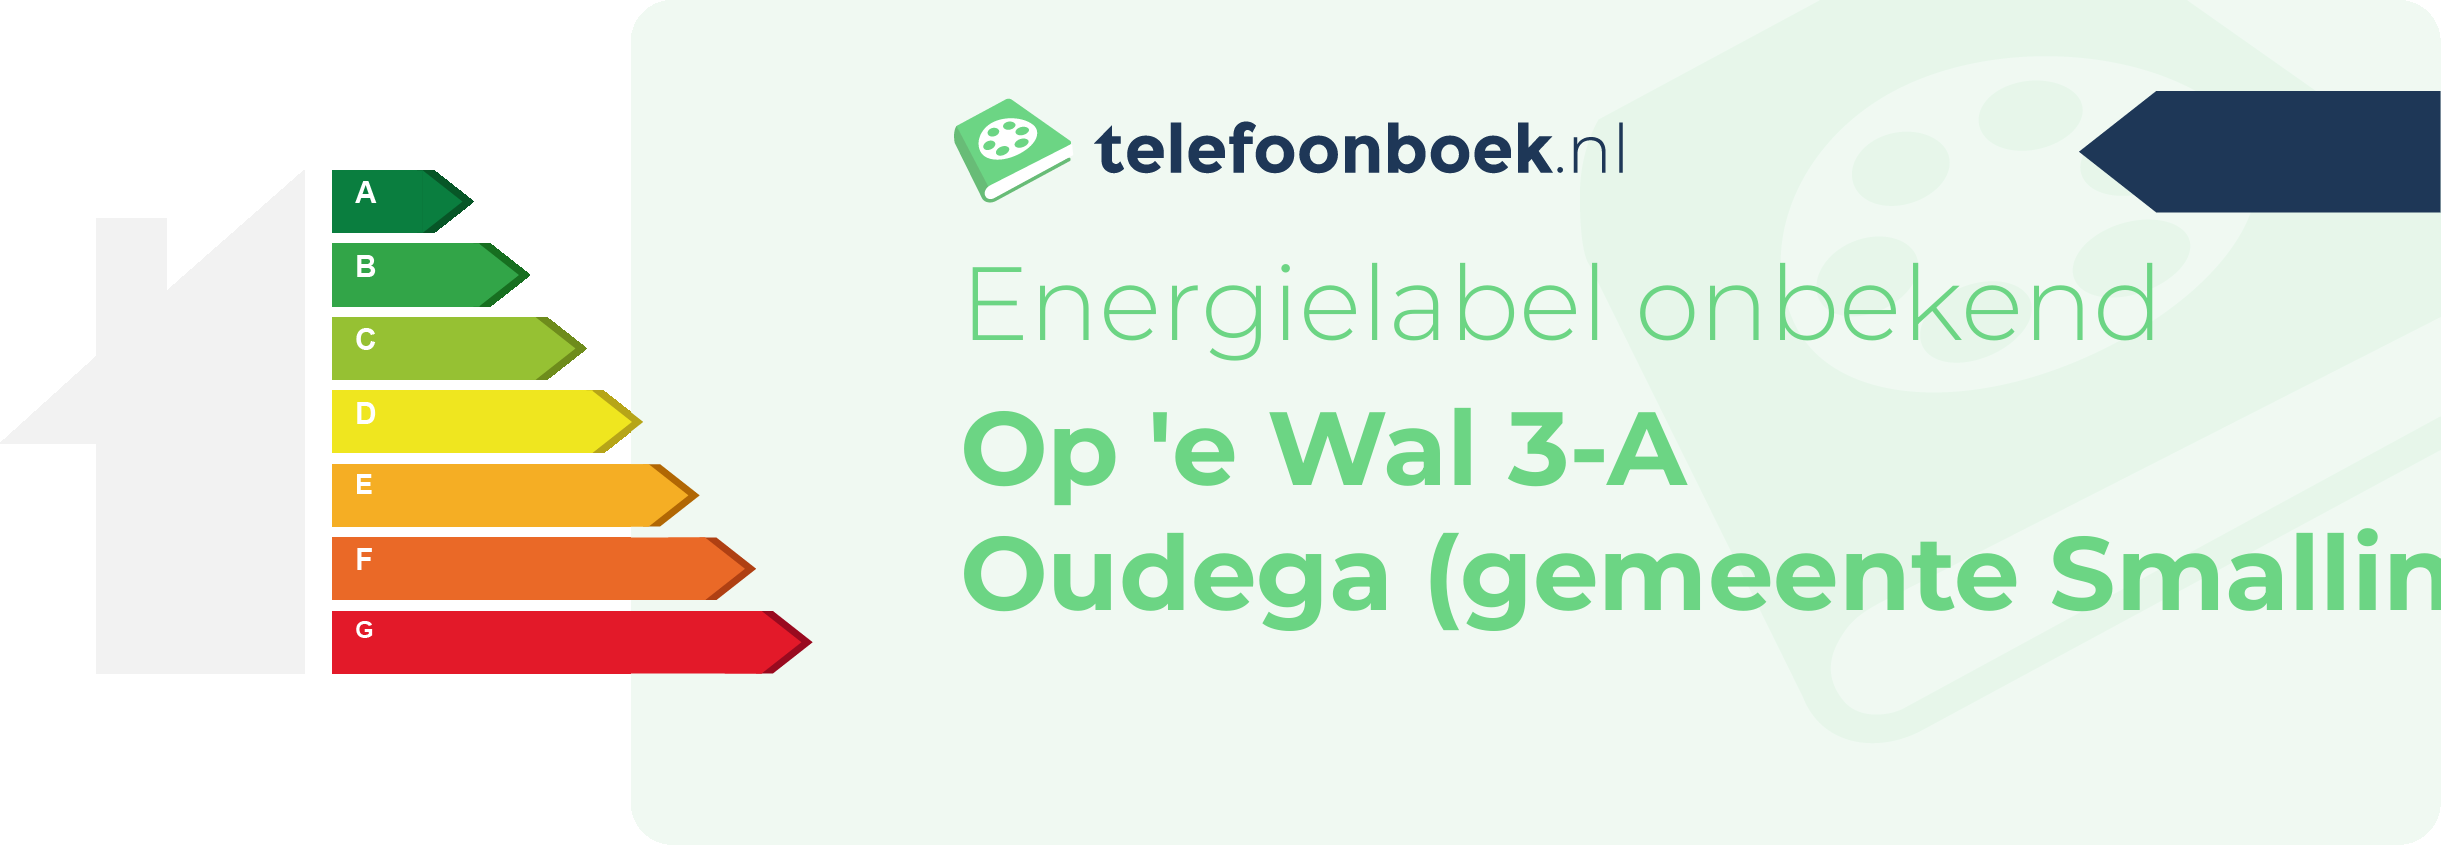 Energielabel Op 'e Wal 3-A Oudega (gemeente Smallingerland Friesland)